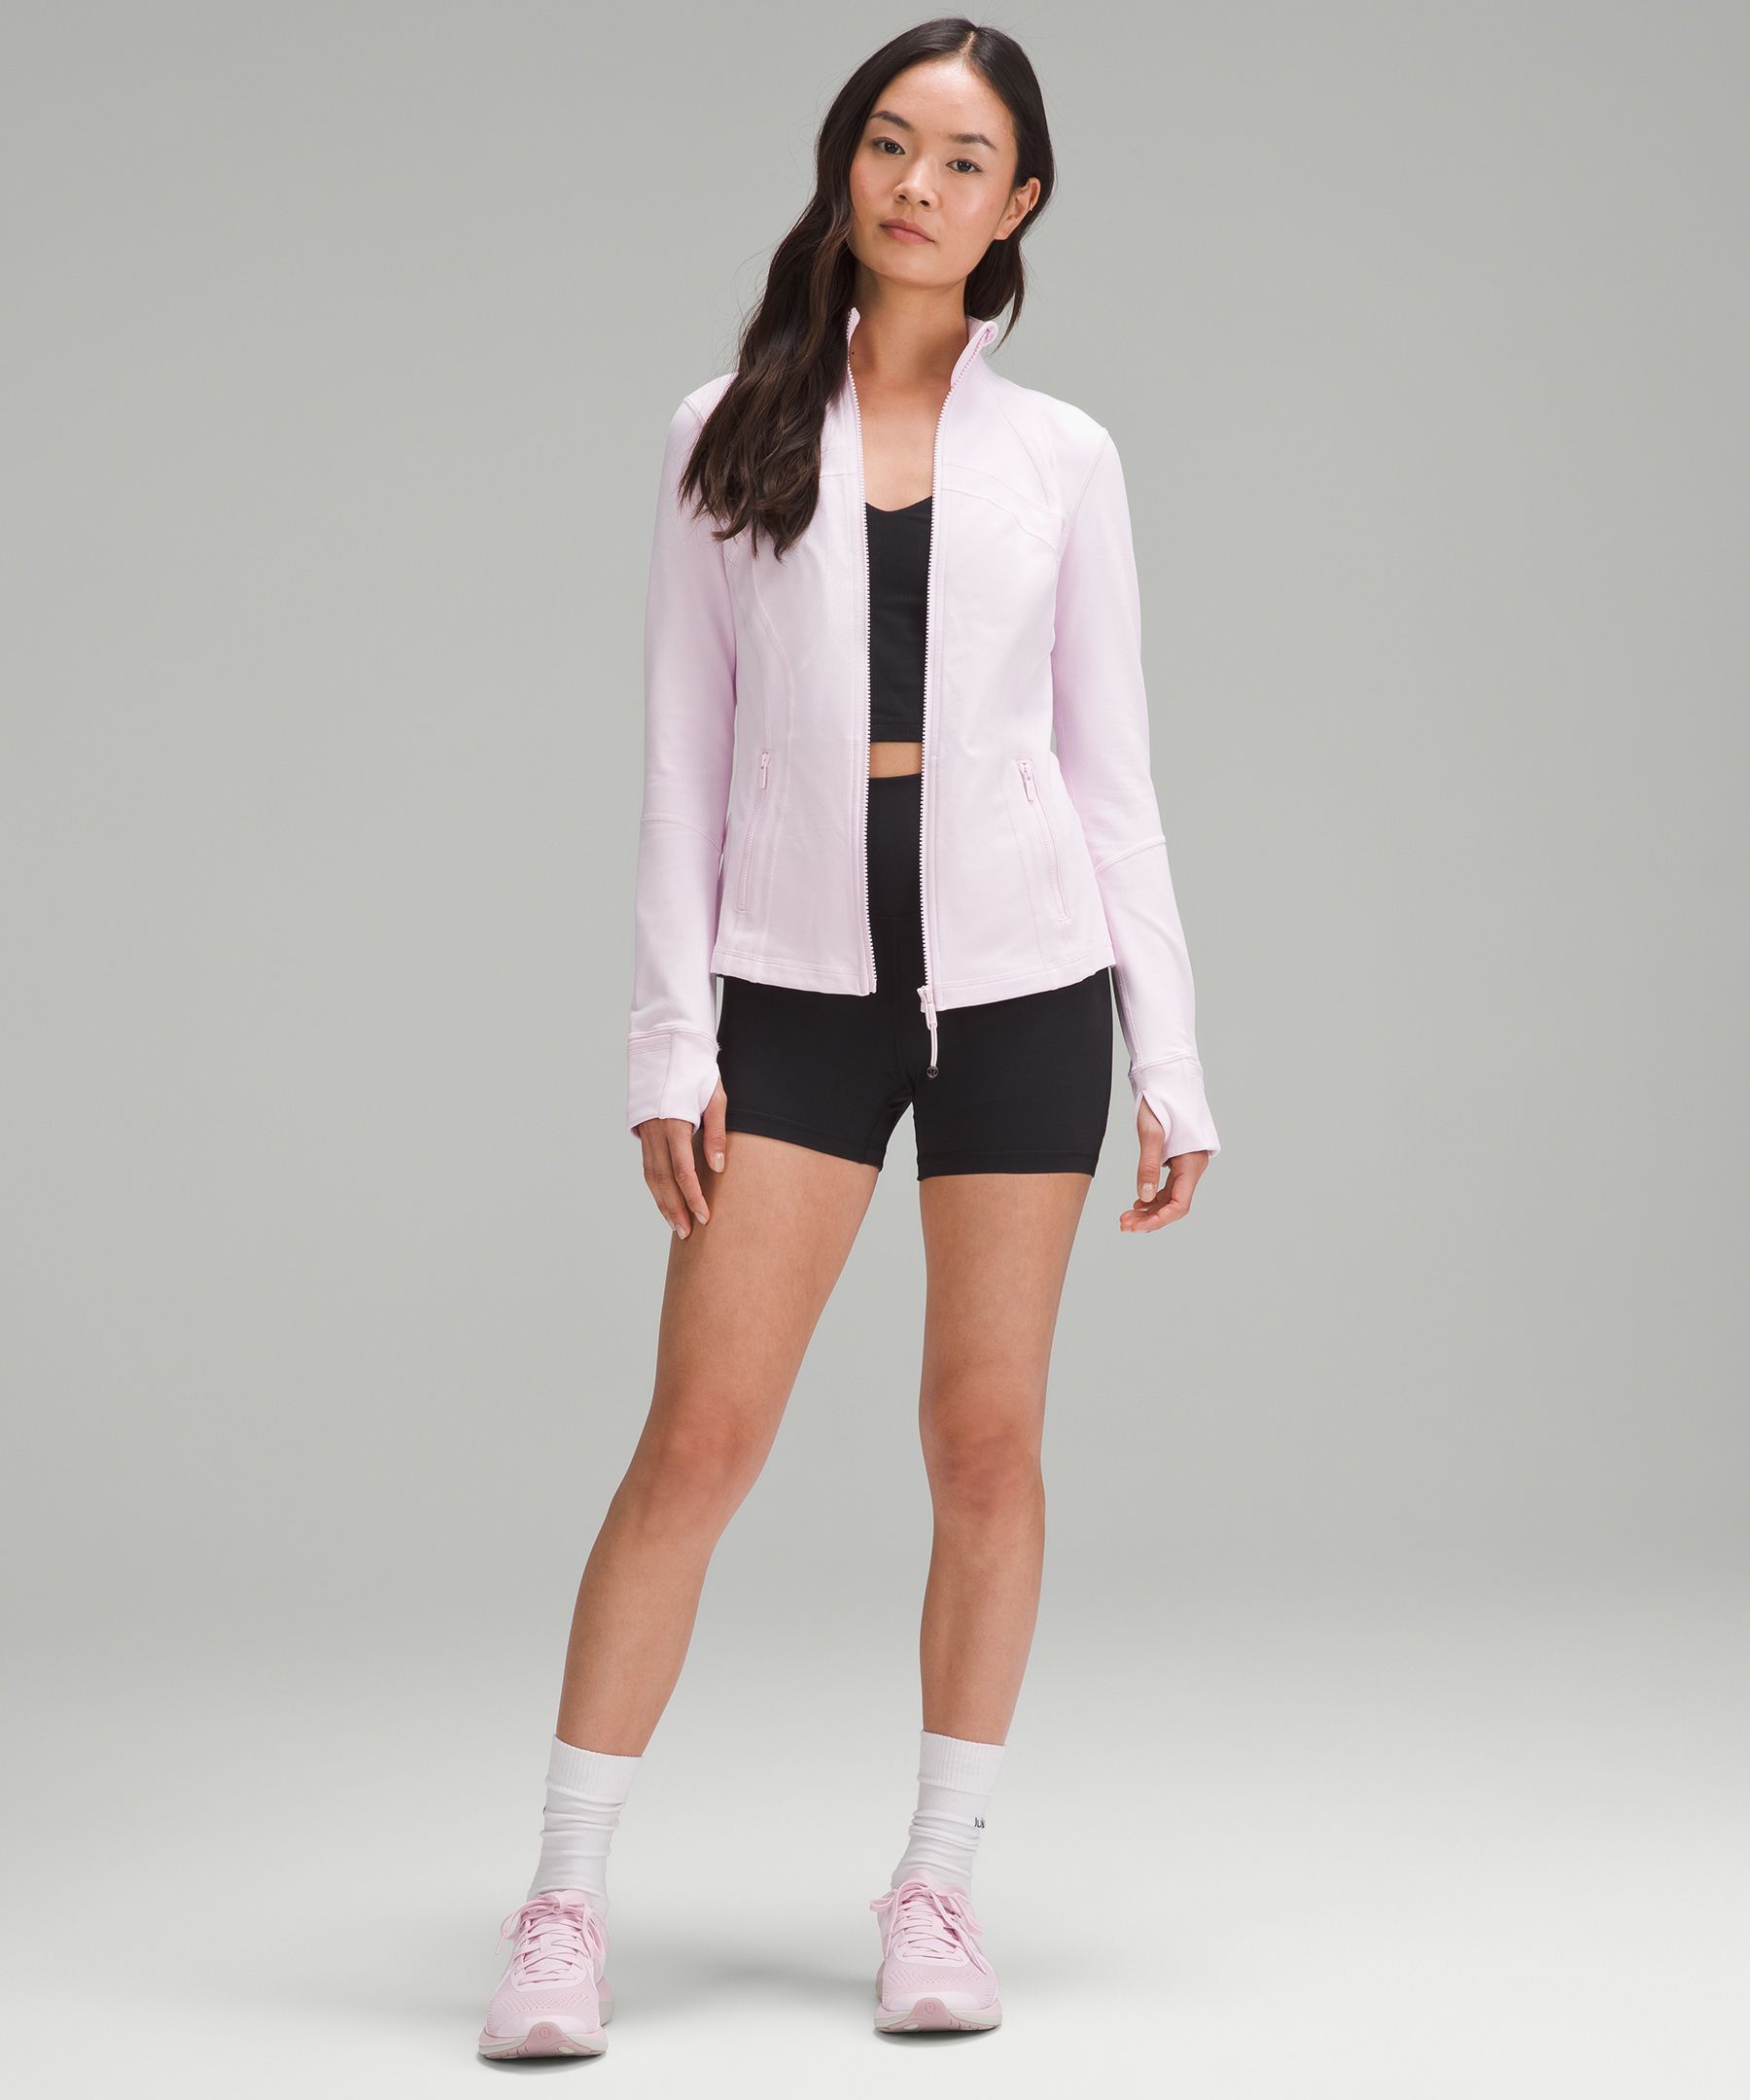 just incase you hadn't seen enough sonic pink 🤣 sonic pink align tank (6), sonic  pink 6” align shorts (4) & white hooded define jacket (4)! 💗🤍 : r/ lululemon